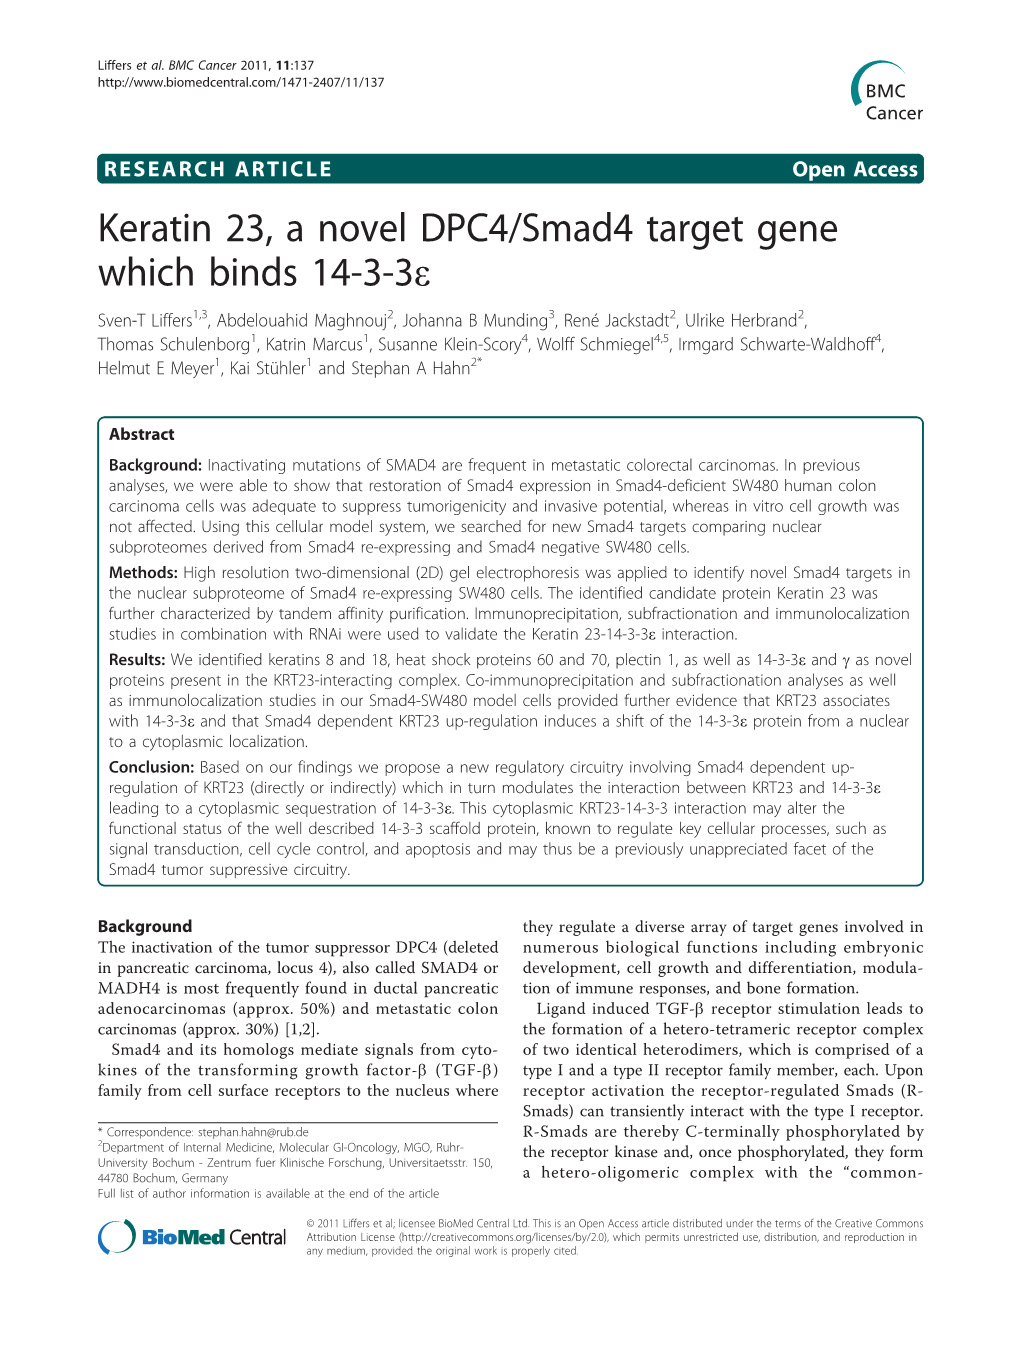 Keratin 23, a Novel DPC4/Smad4 Target Gene Which Binds 14-3-3Ε